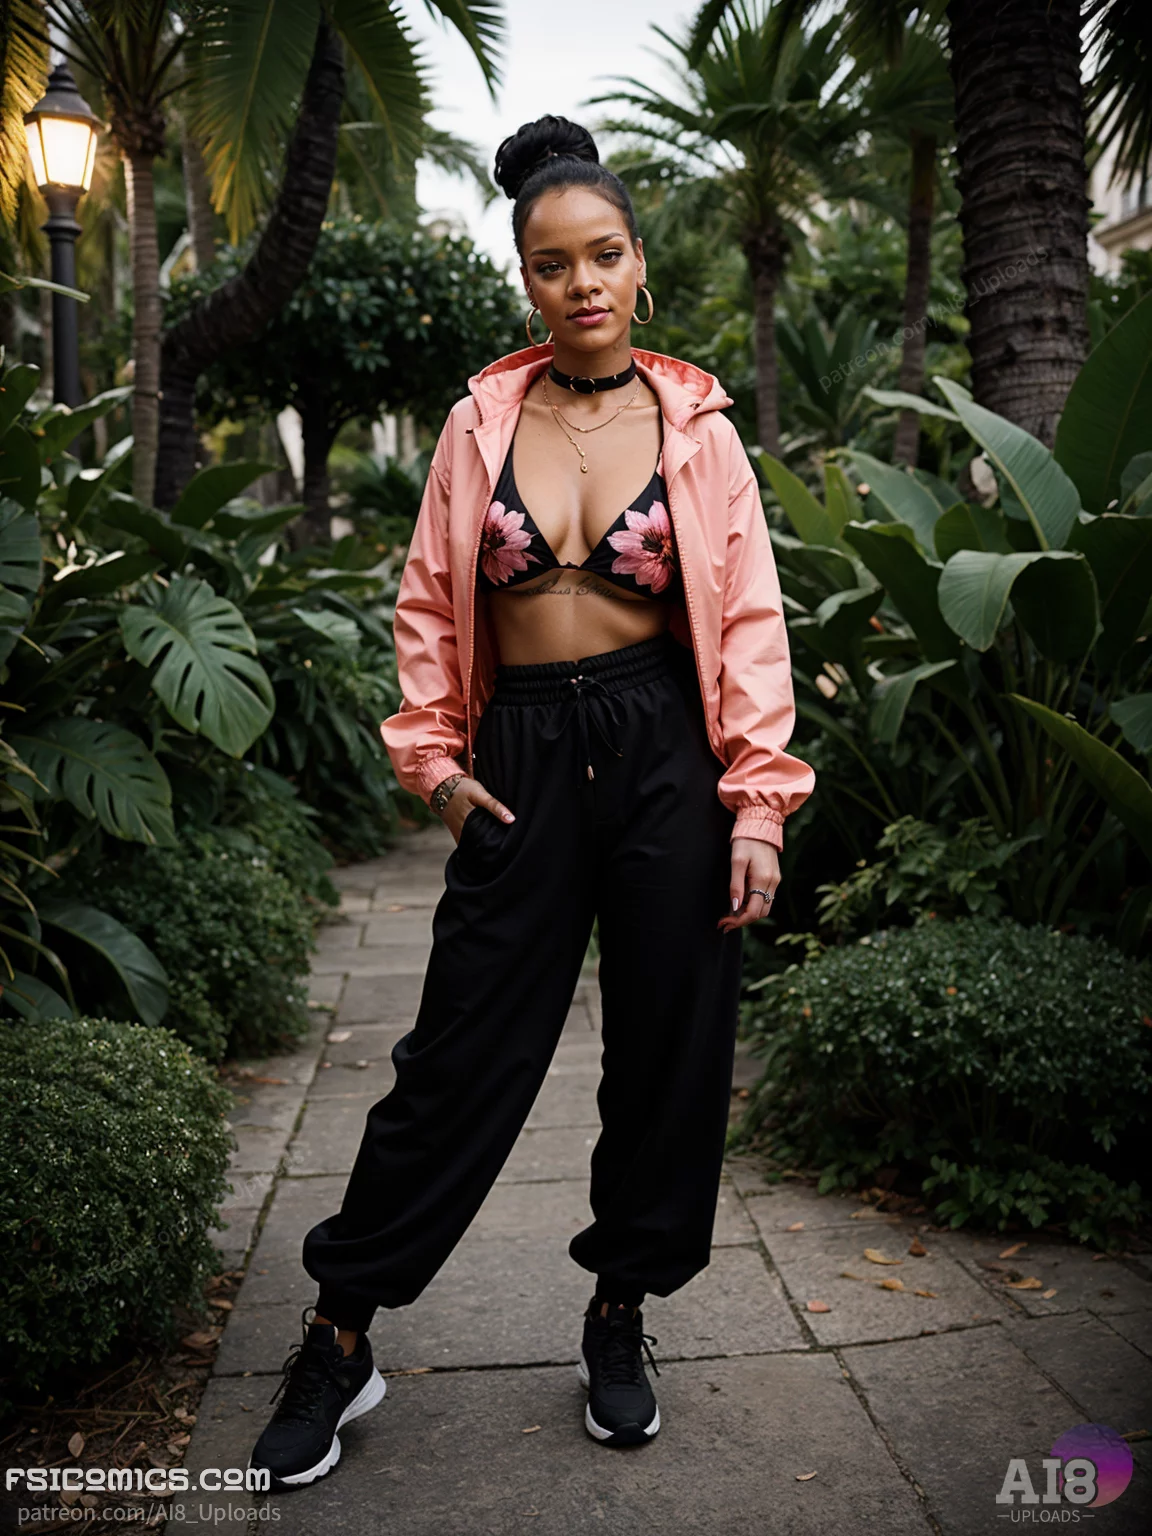 Rihanna - Tropical Island - AI8 Uploads - 23 - FSIComics